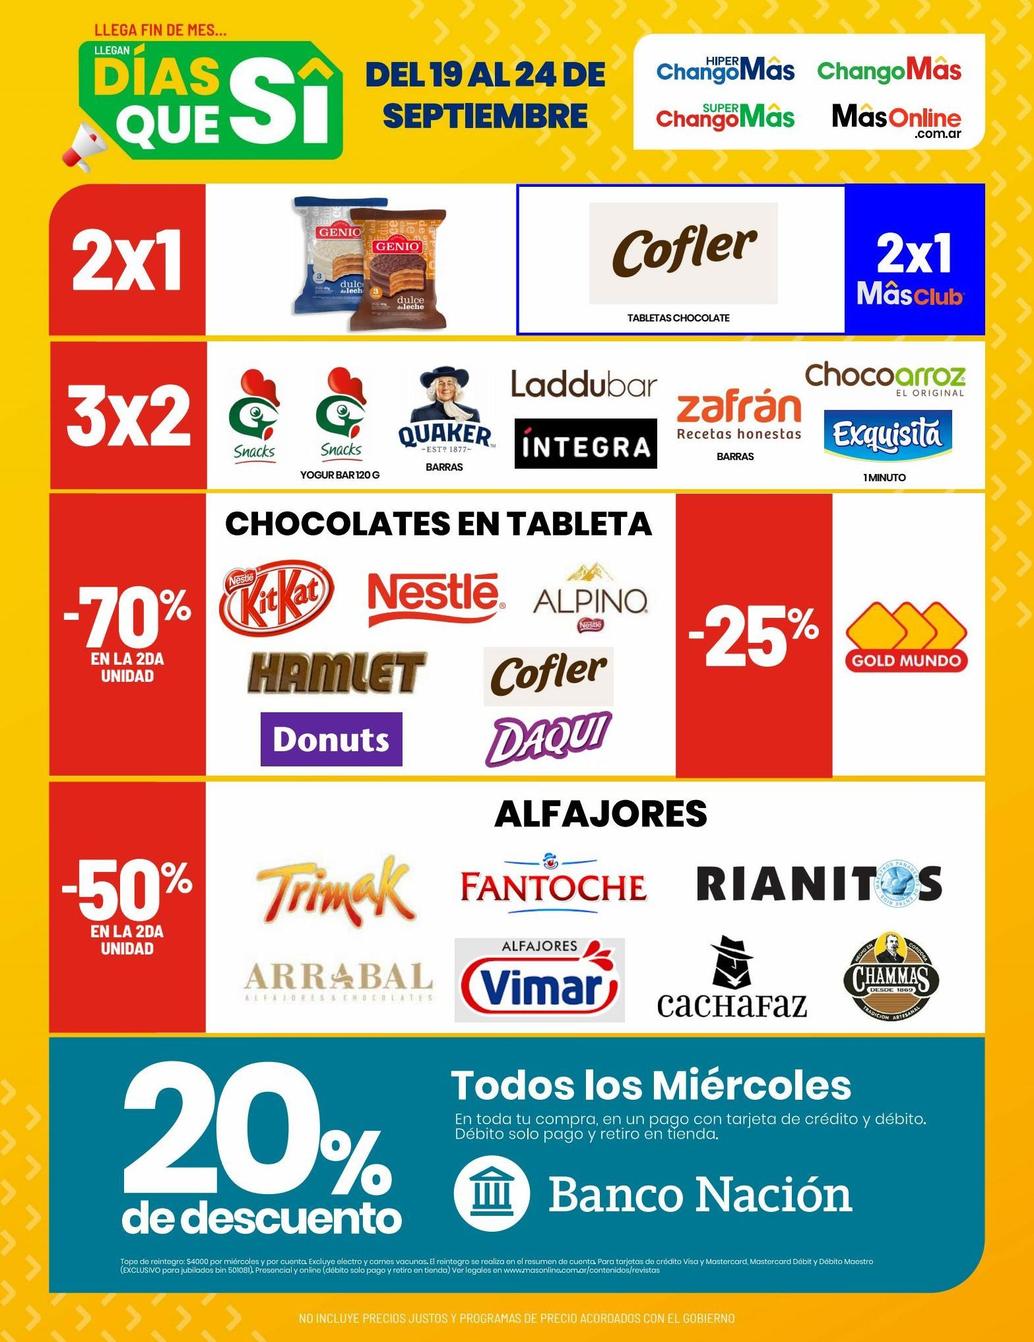 Oferta de Chocolate Nestlé en HiperChangomas